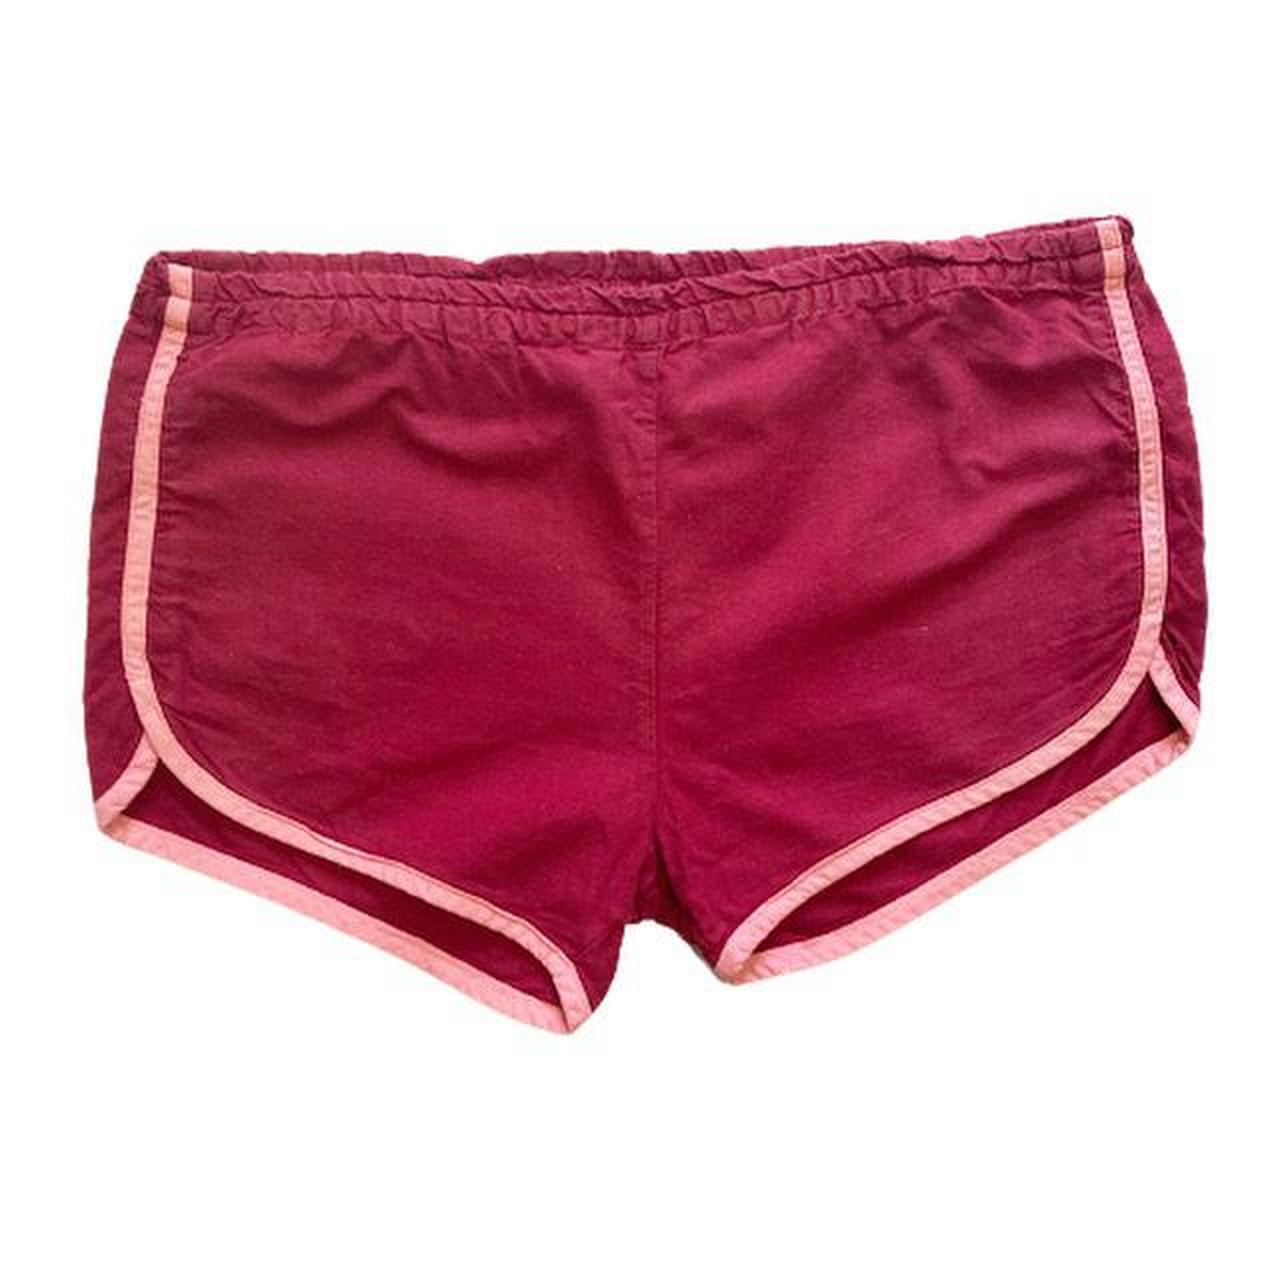 Vintage shorts in burgundy with contrasting trim. A... - Depop